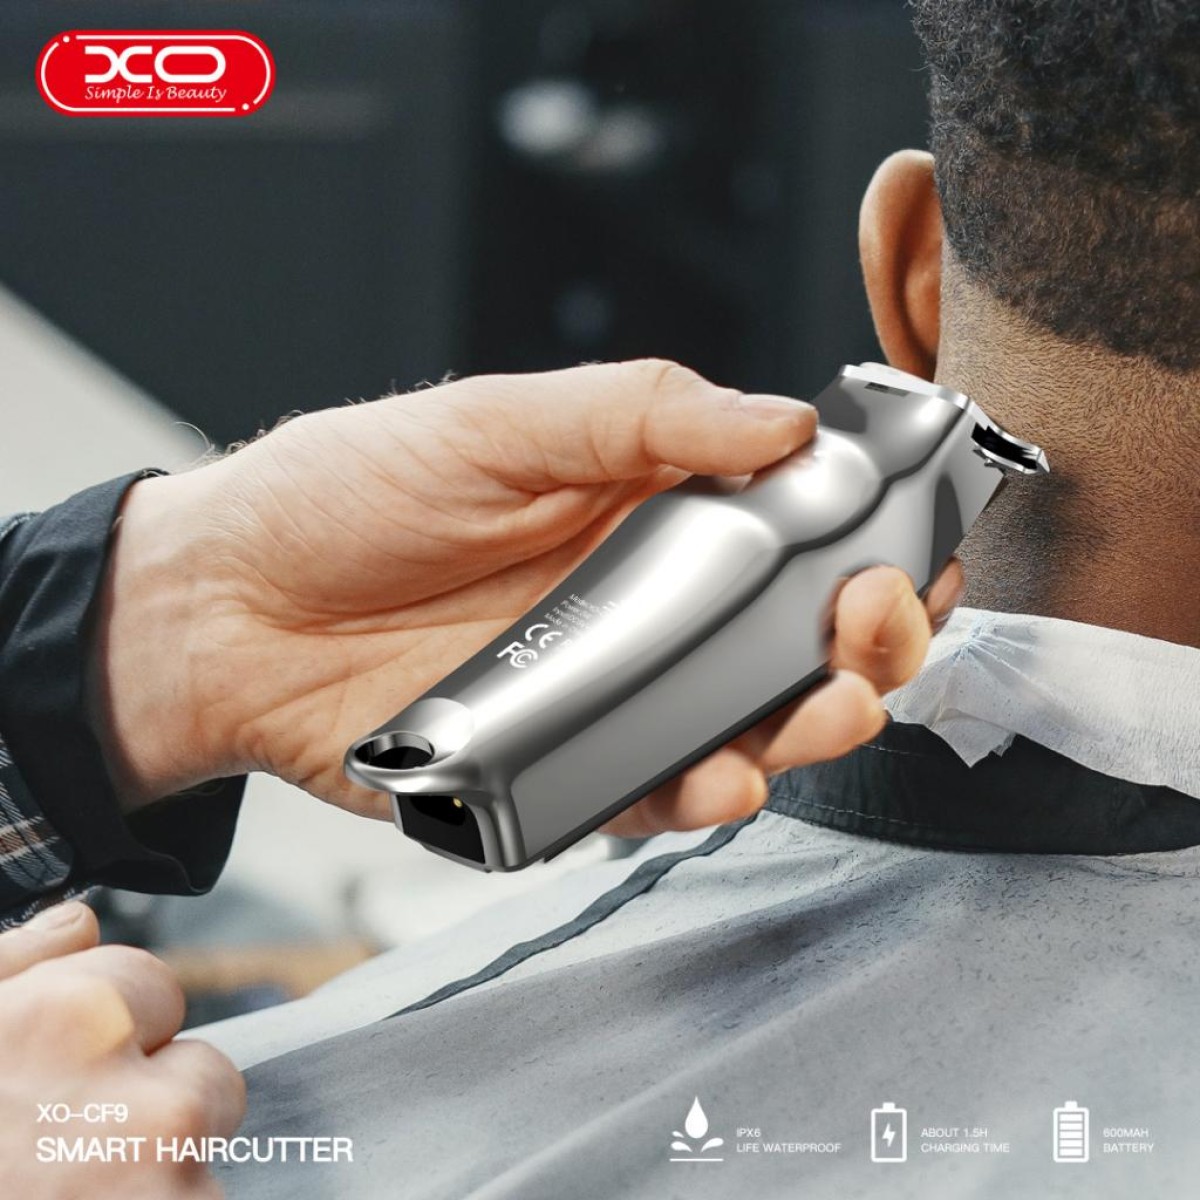 XO CF9 Digital Haircutting Scissors